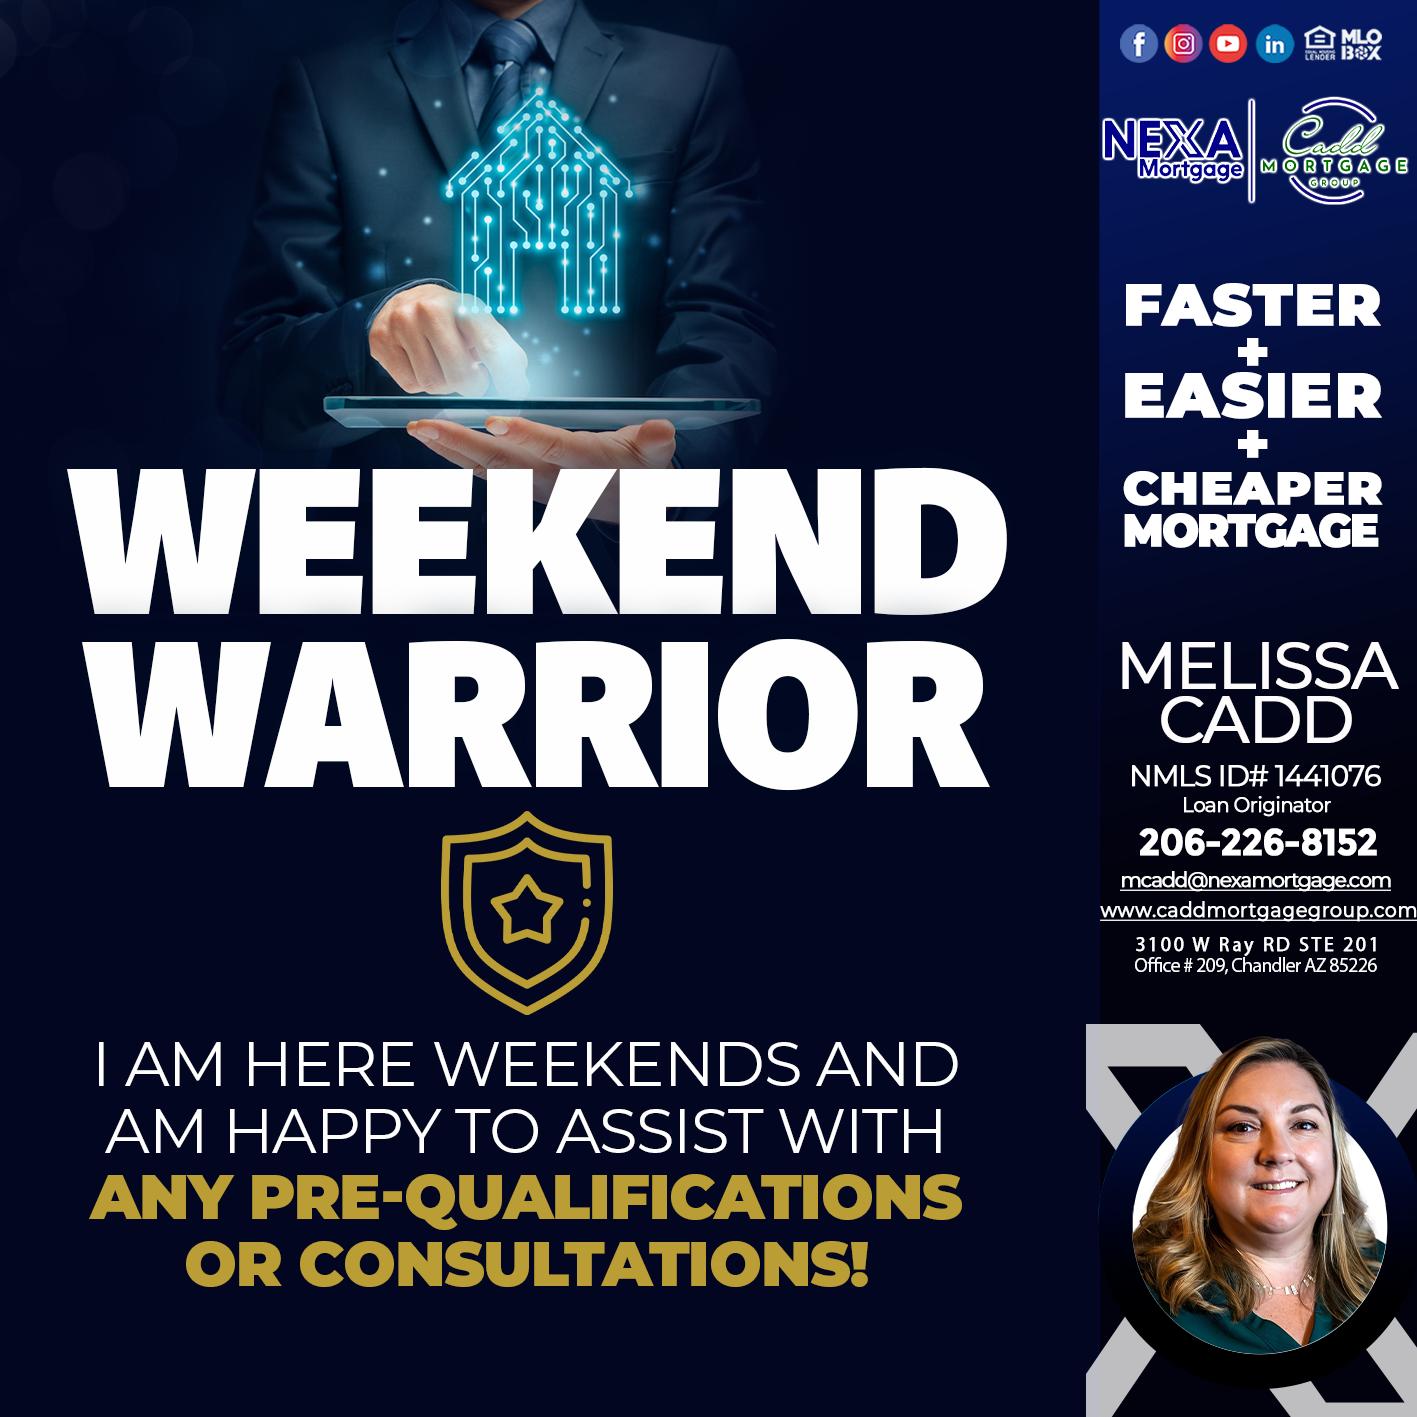 weekend wa - Melissa Cadd -Loan Originator